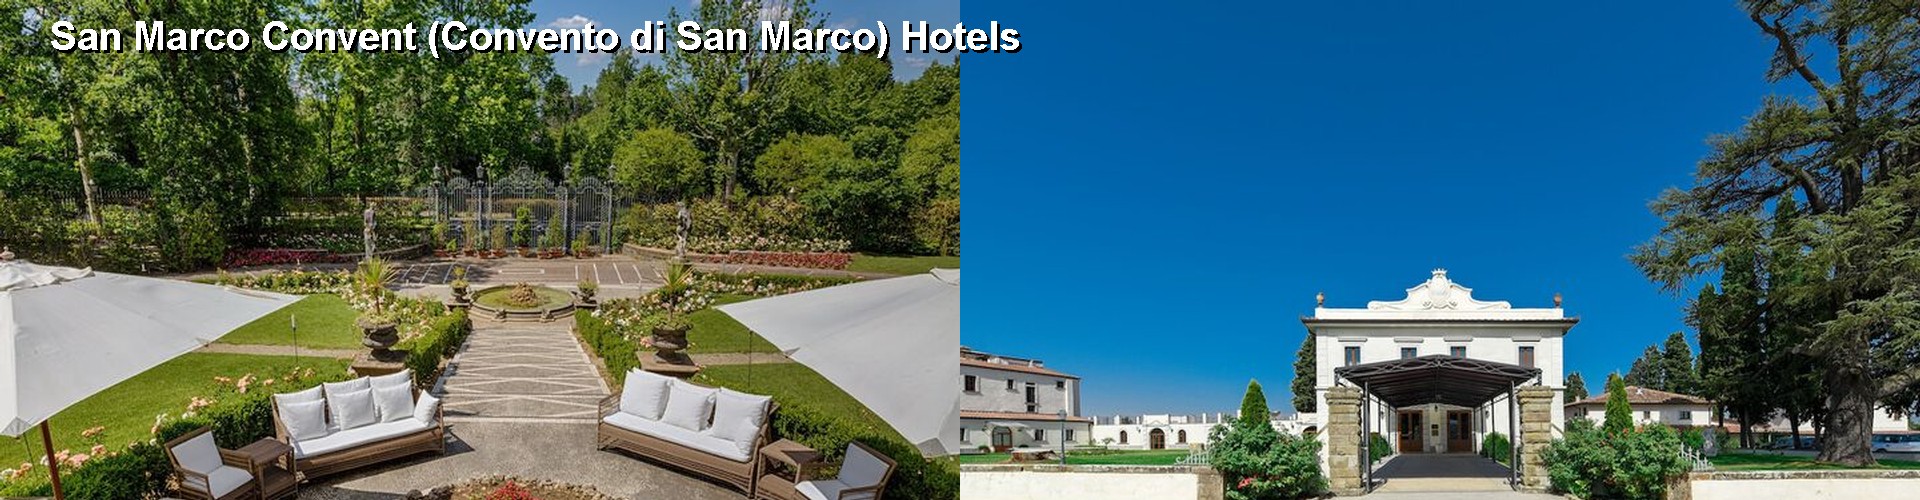 5 Best Hotels near San Marco Convent (Convento di San Marco)